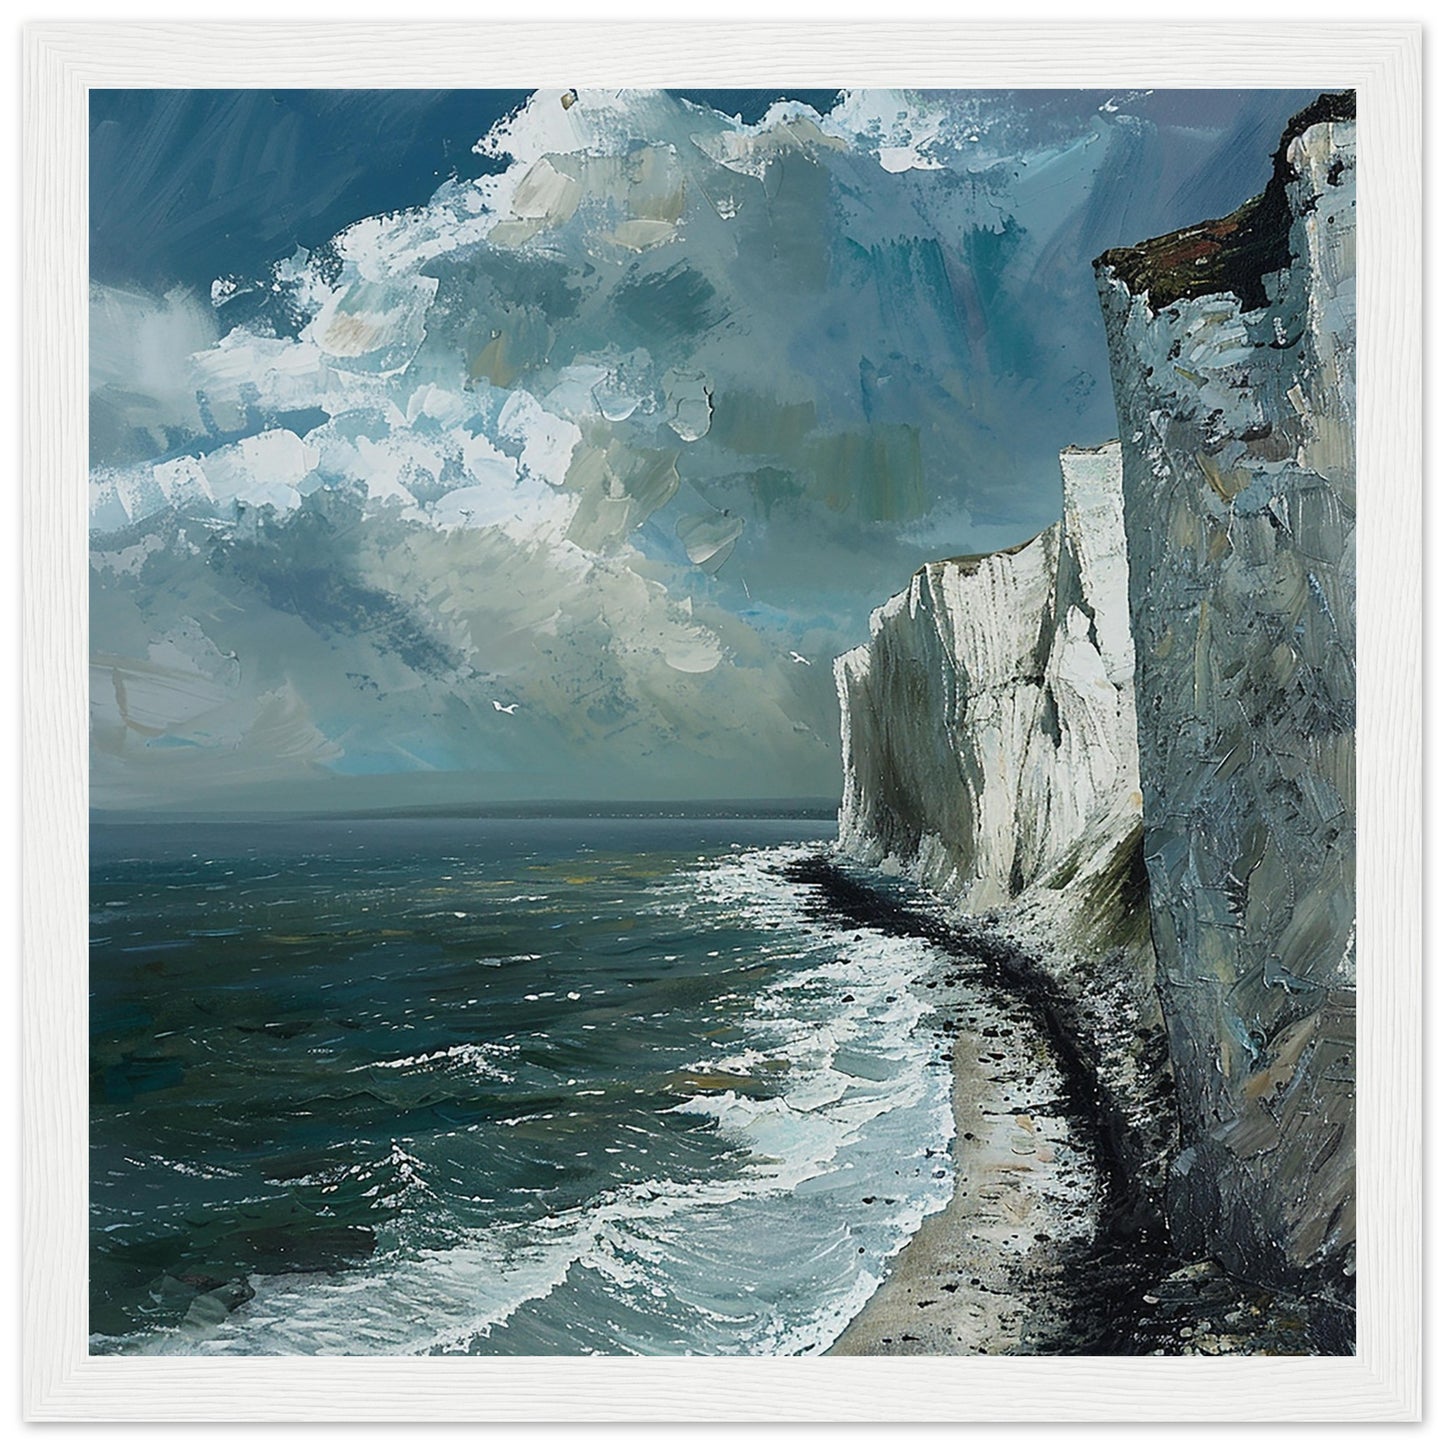 Artwork Print Majestic Cliffs: Serenity at Sea, Dover large framed White Wood Frame| By Print Room Ltd